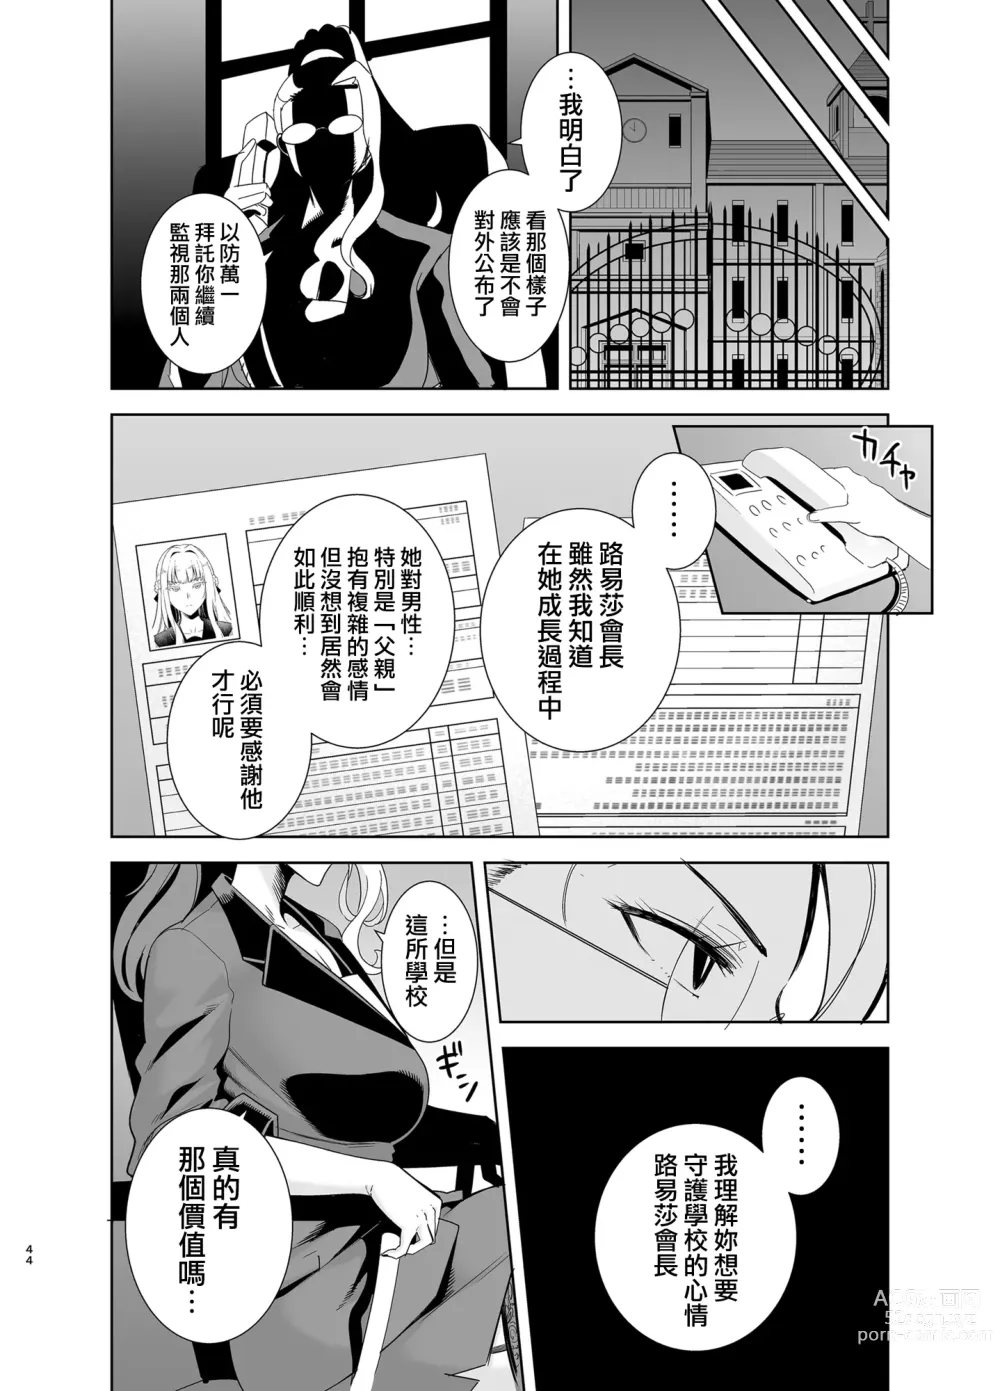 Page 44 of manga 聖華女学院高等部公認竿おじさん 4